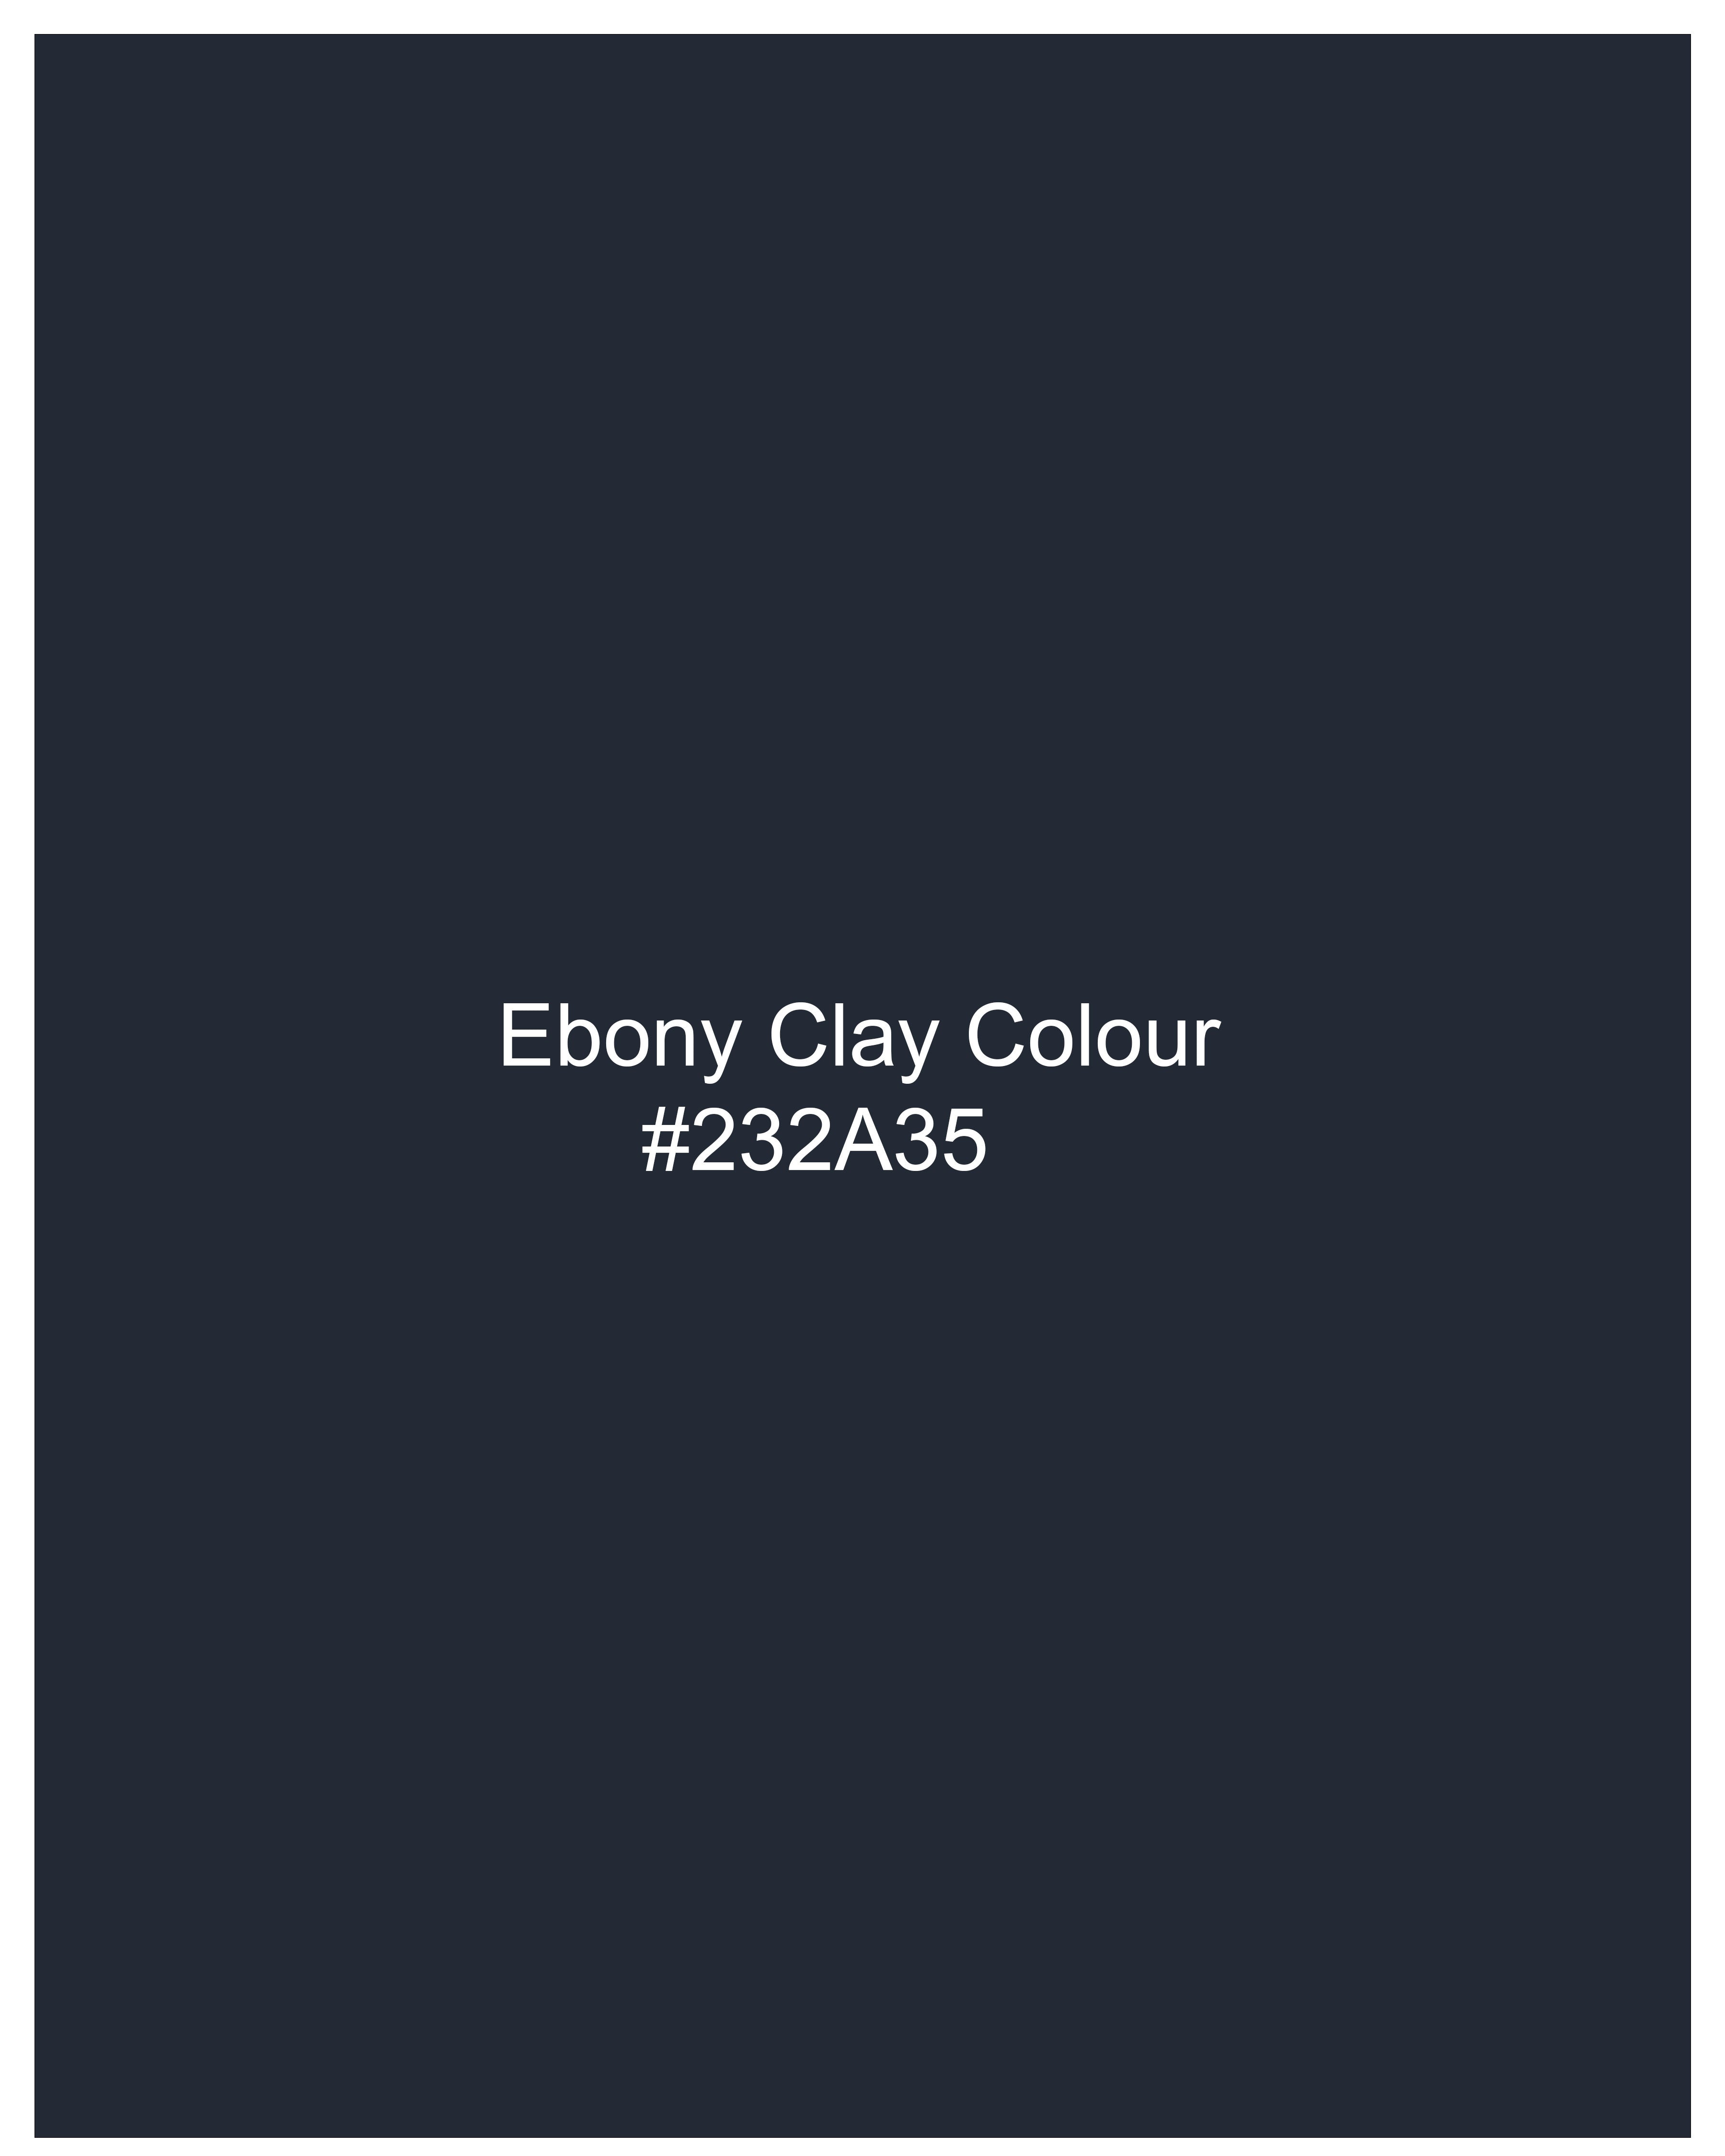 Ebony Clay Blue Windowpane Cross Buttoned Bandhgaala Blazer BL2501-CBG2-36, BL2501-CBG2-38, BL2501-CBG2-40, BL2501-CBG2-42, BL2501-CBG2-44, BL2501-CBG2-46, BL2501-CBG2-48, BL2501-CBG2-50, BL2501-CBG2-52, BL2501-CBG2-54, BL2501-CBG2-56, BL2501-CBG2-58, BL2501-CBG2-60